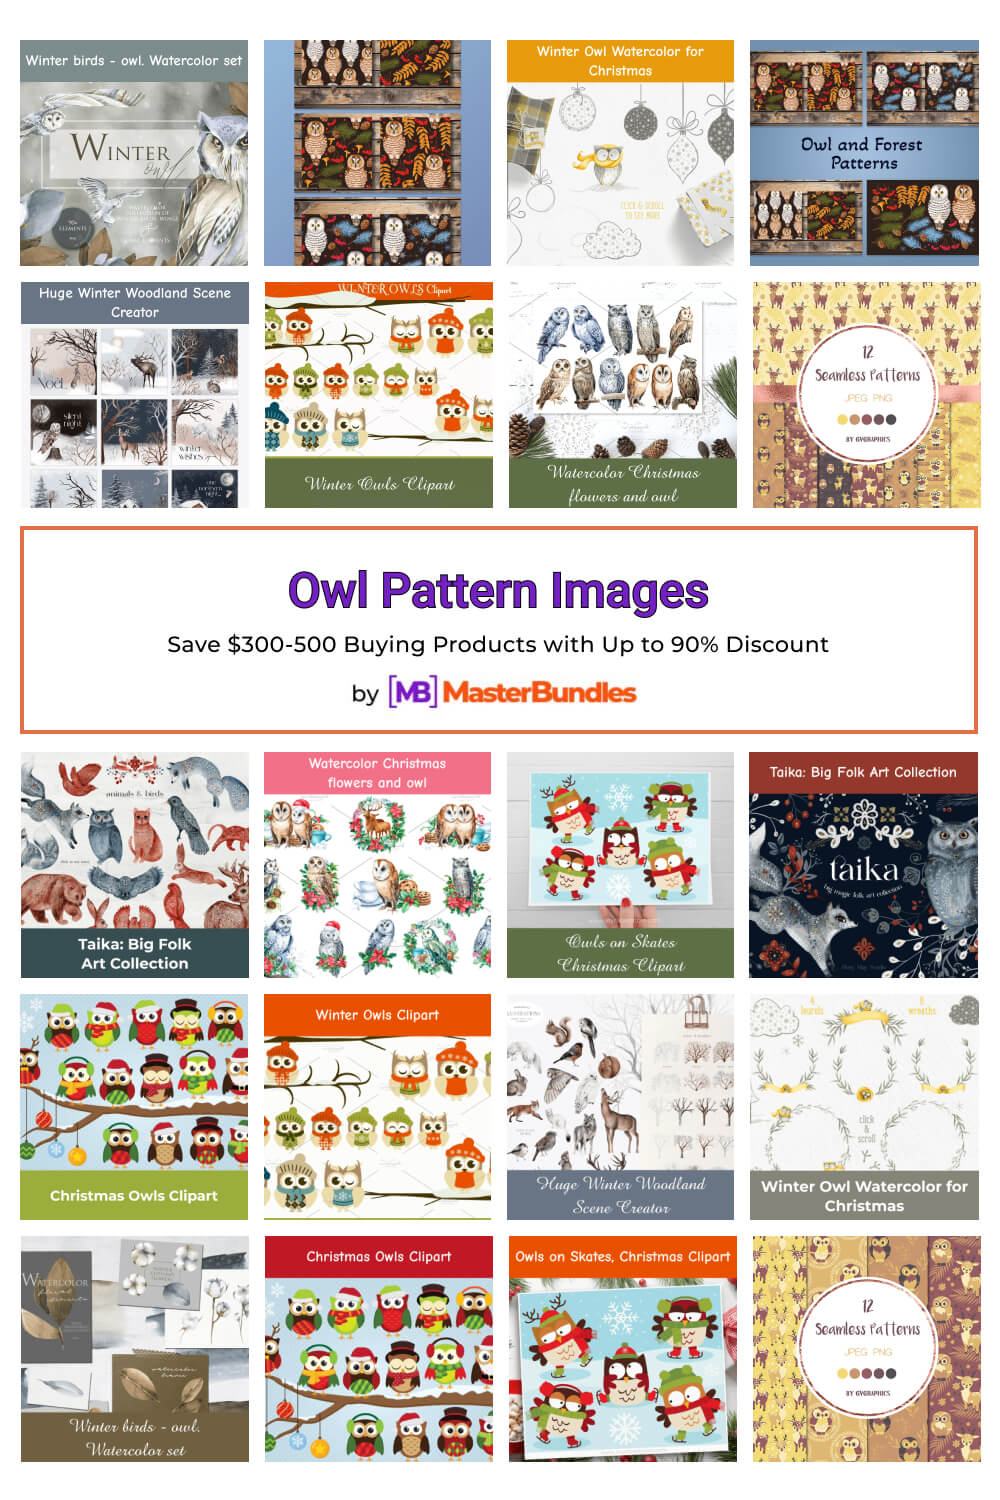 owl pattern images pinterest image.